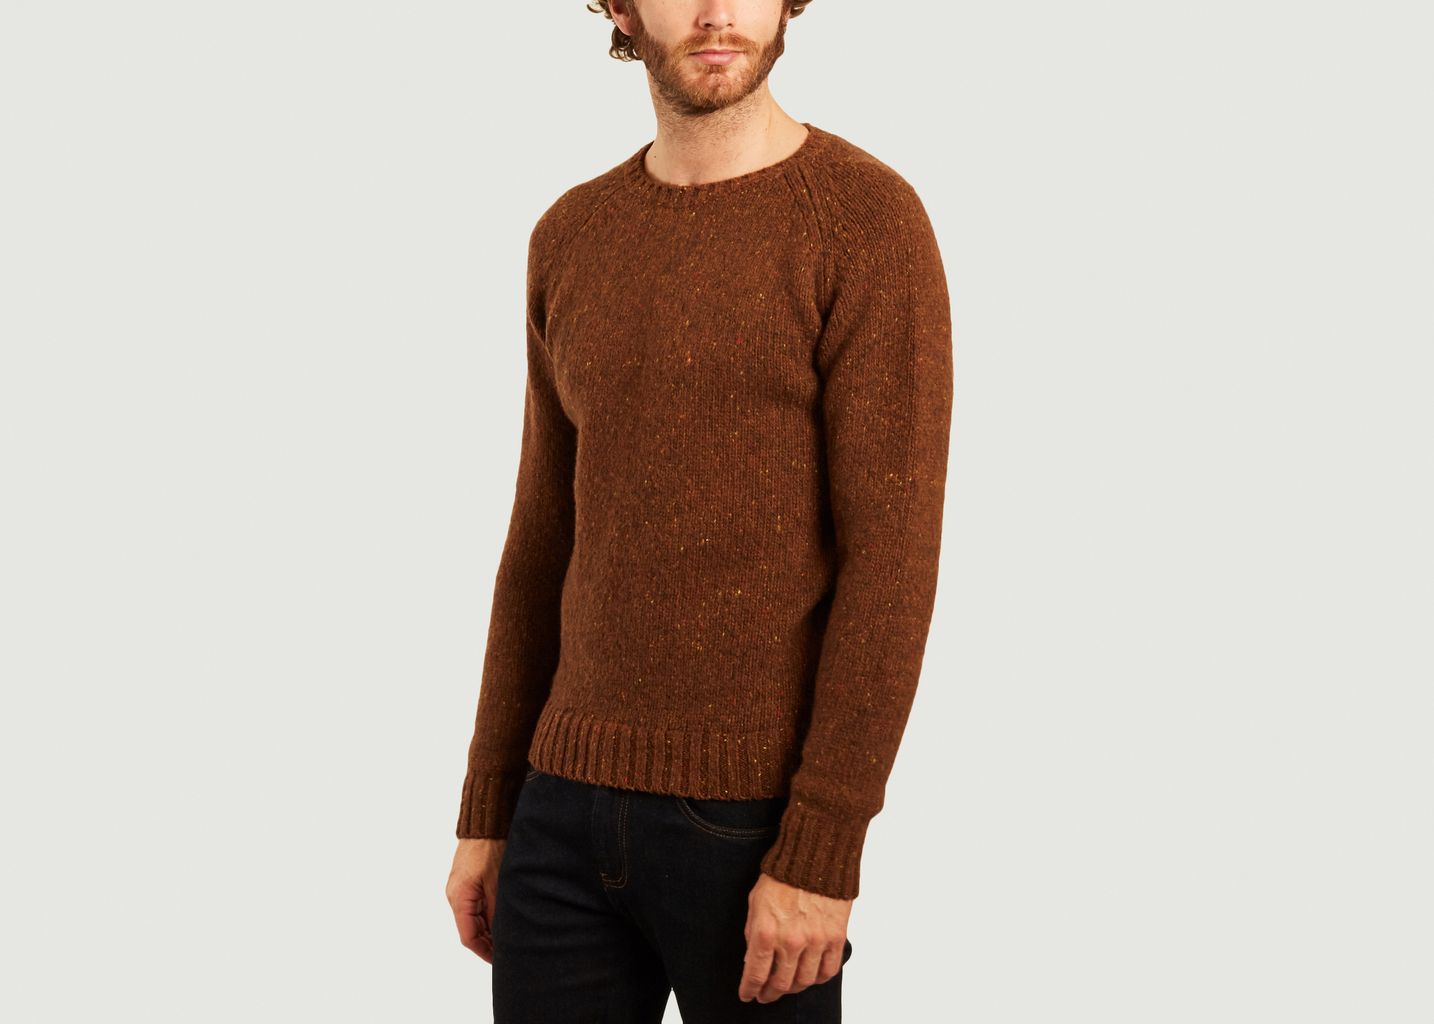 Brushed sweater - Edmmond Studios